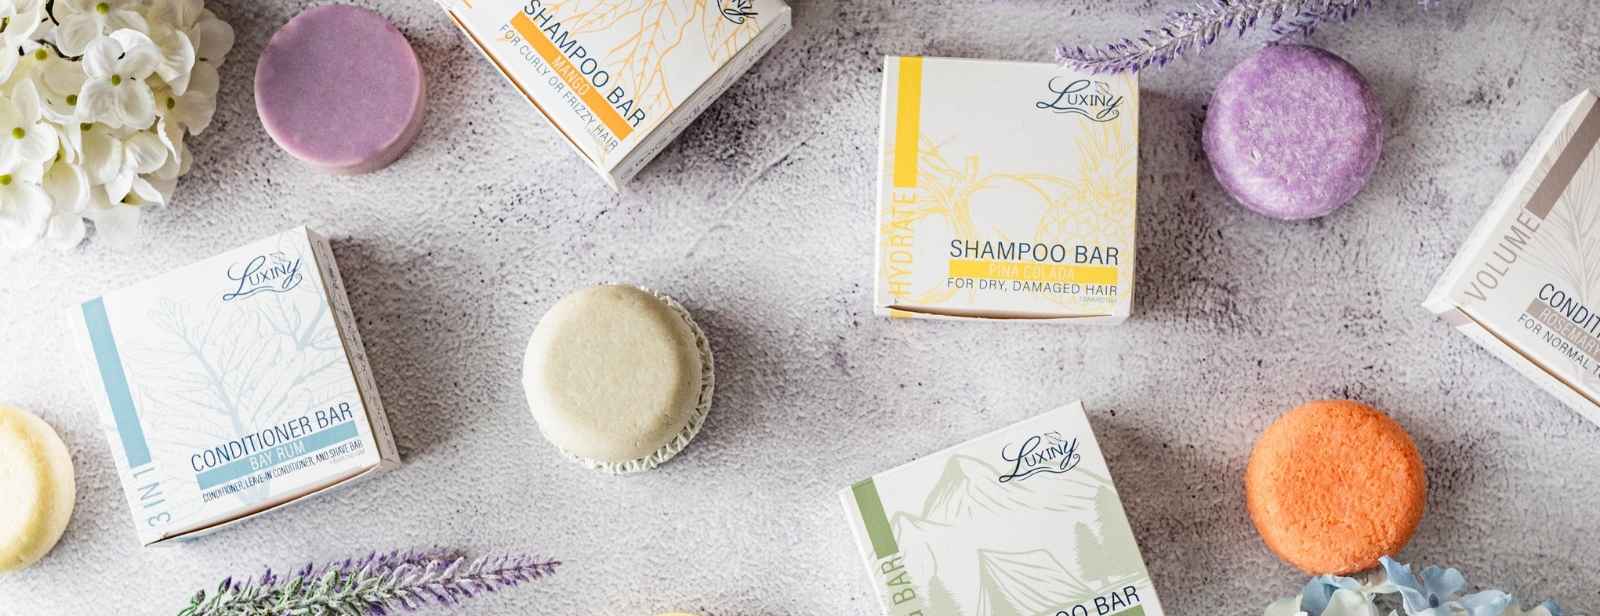 Shampoo Bars Luxiny Products